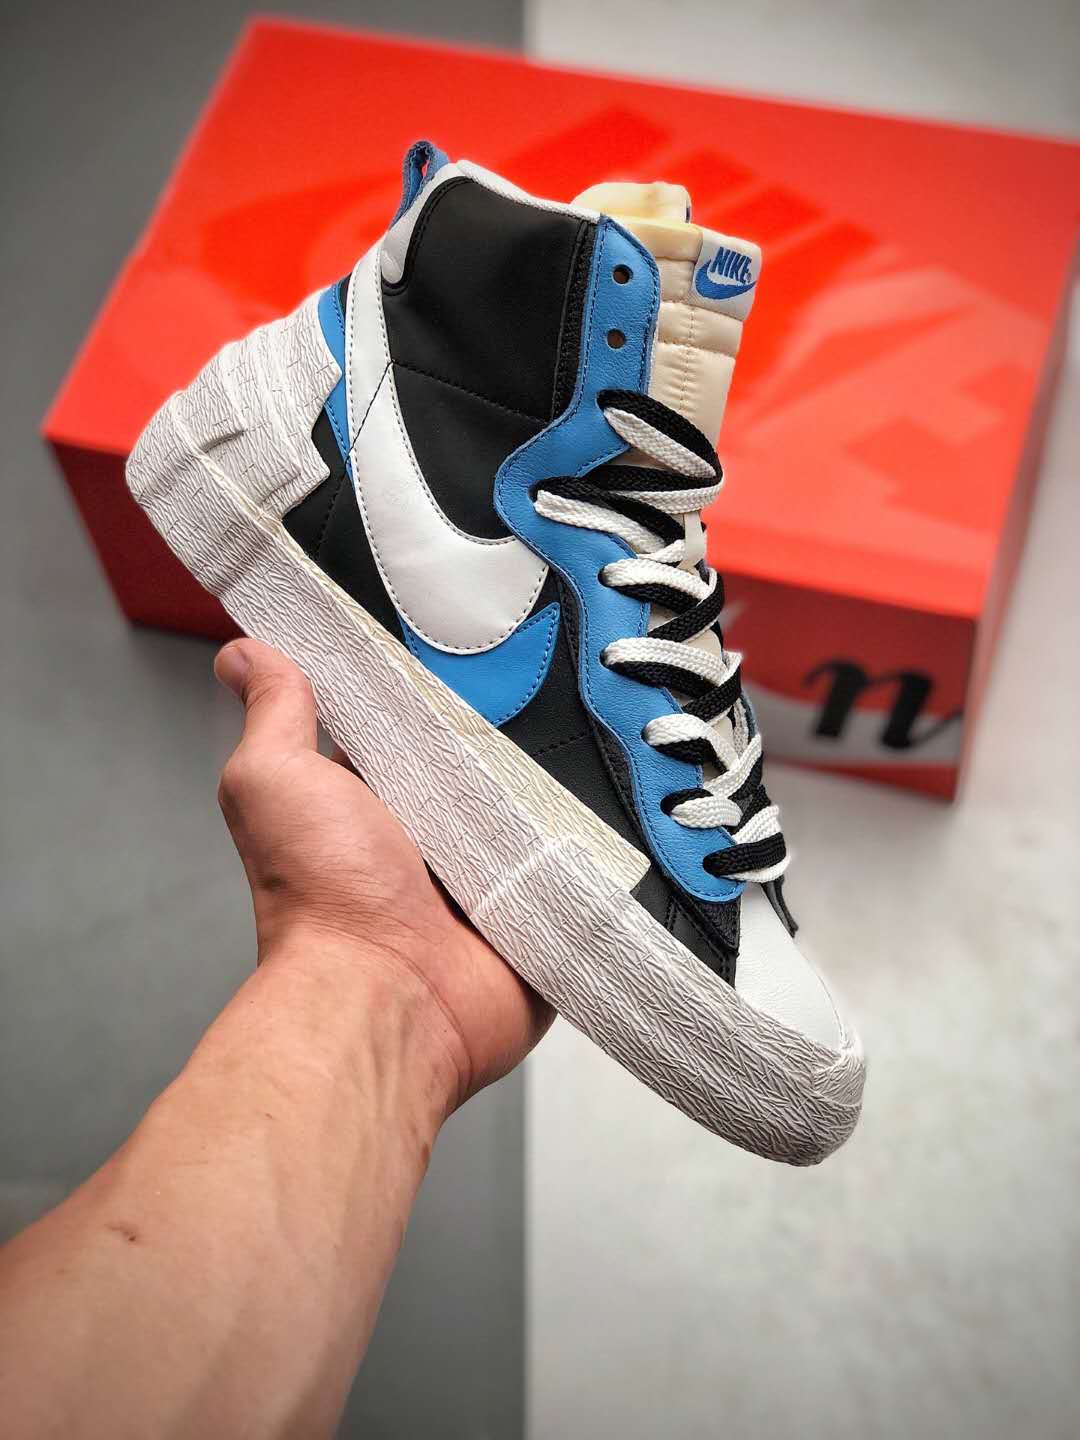 Nike sacai x Blazer Mid 'Black Blue' BV0072-001 - Limited Edition Collaboration Sneakers